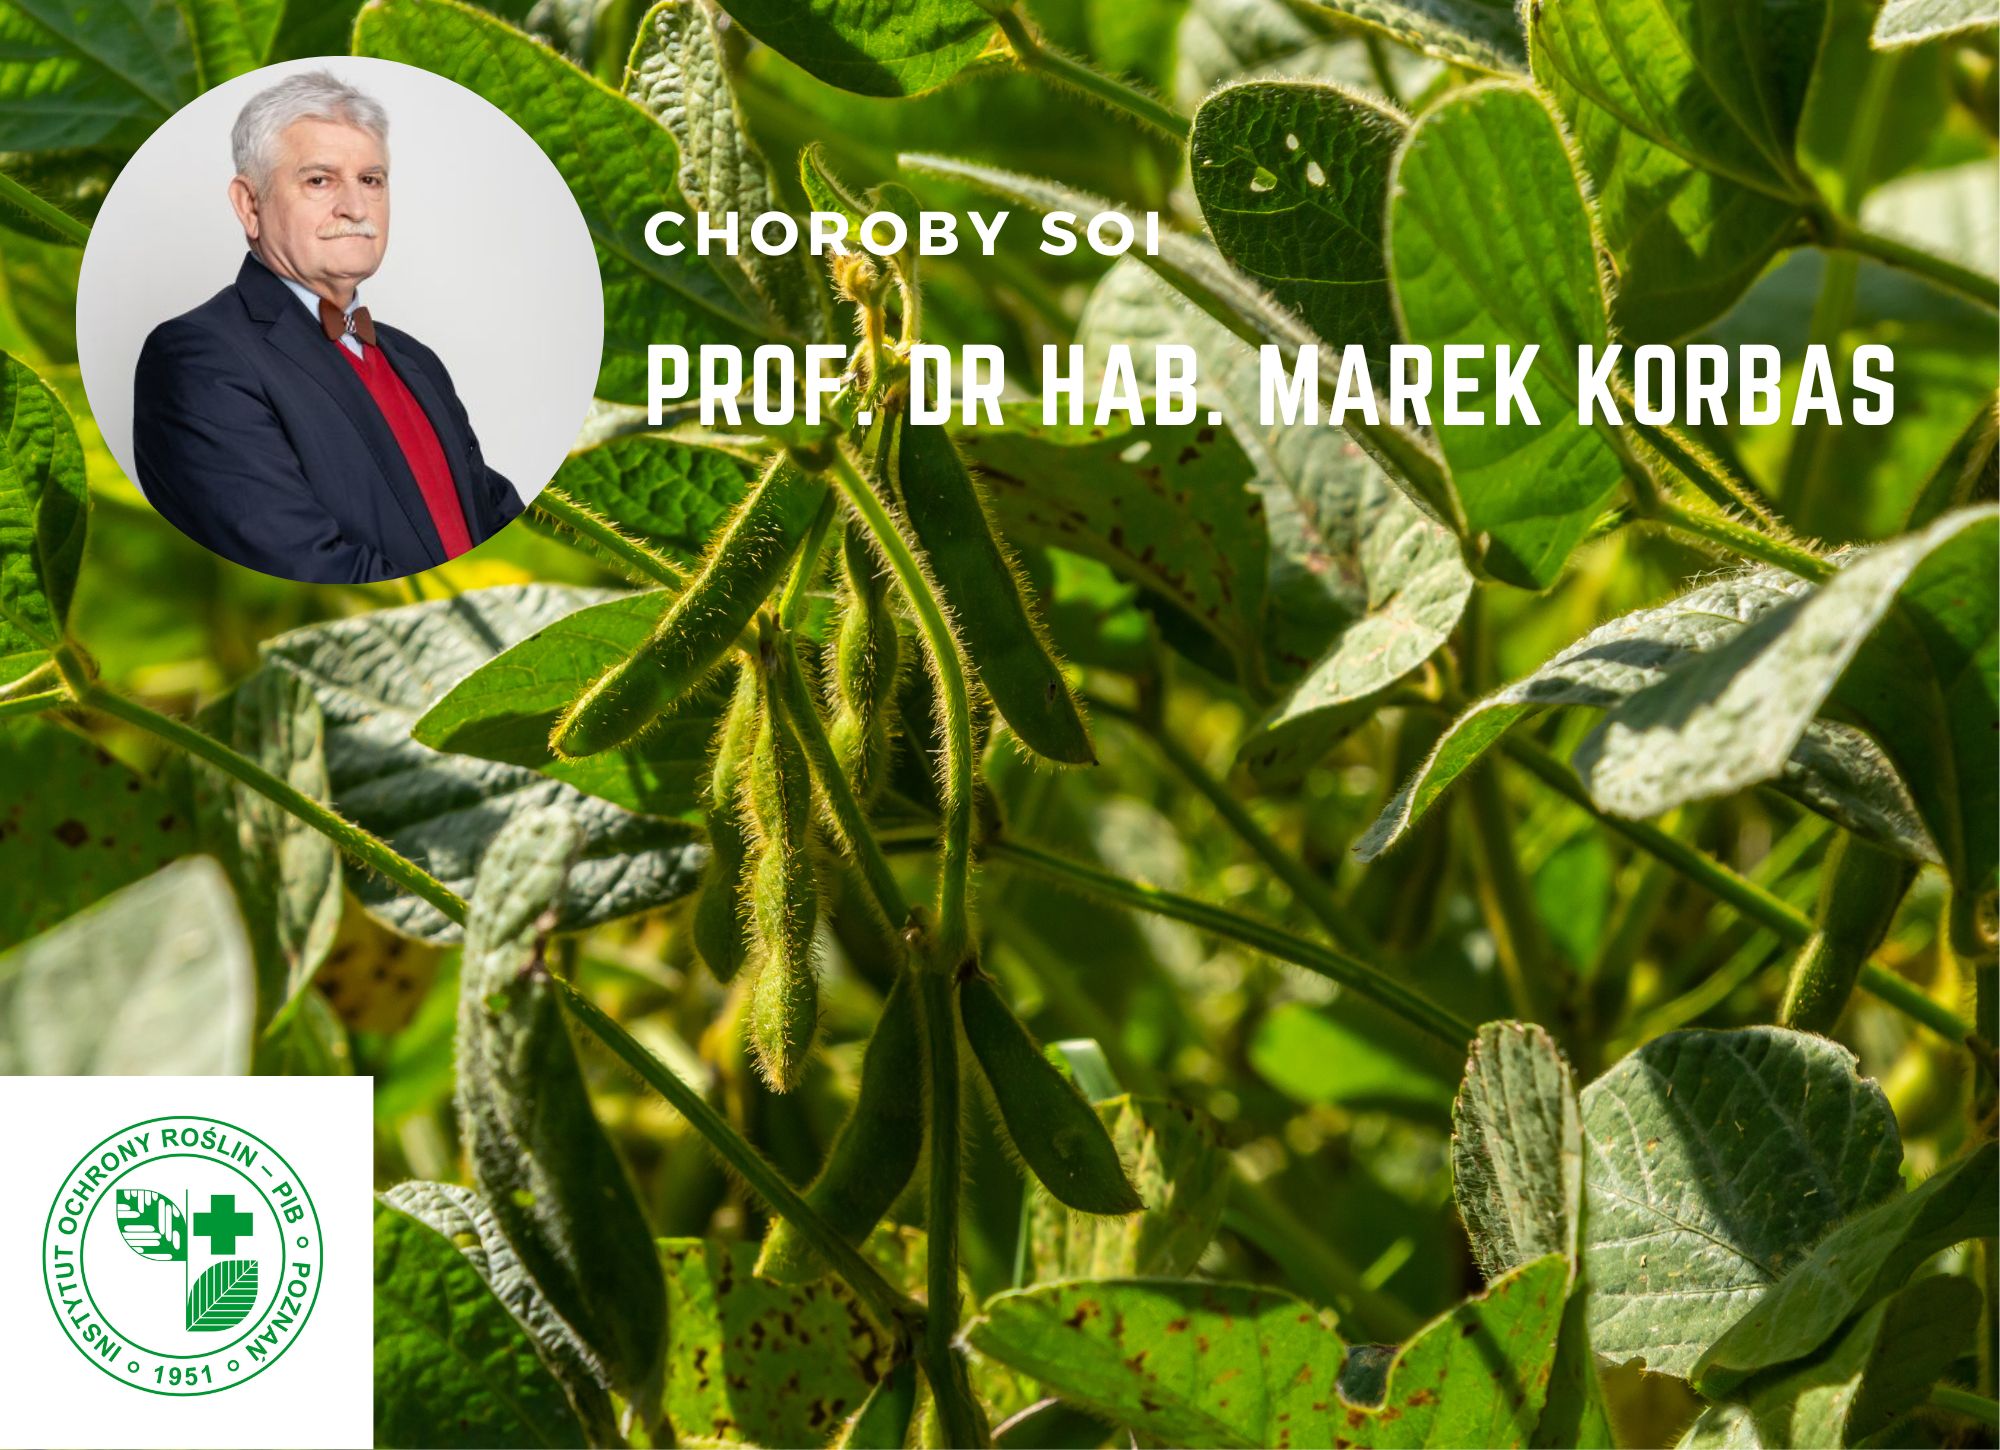 Prof. dr hab. Marek Korbas - relacja z plantacji soi